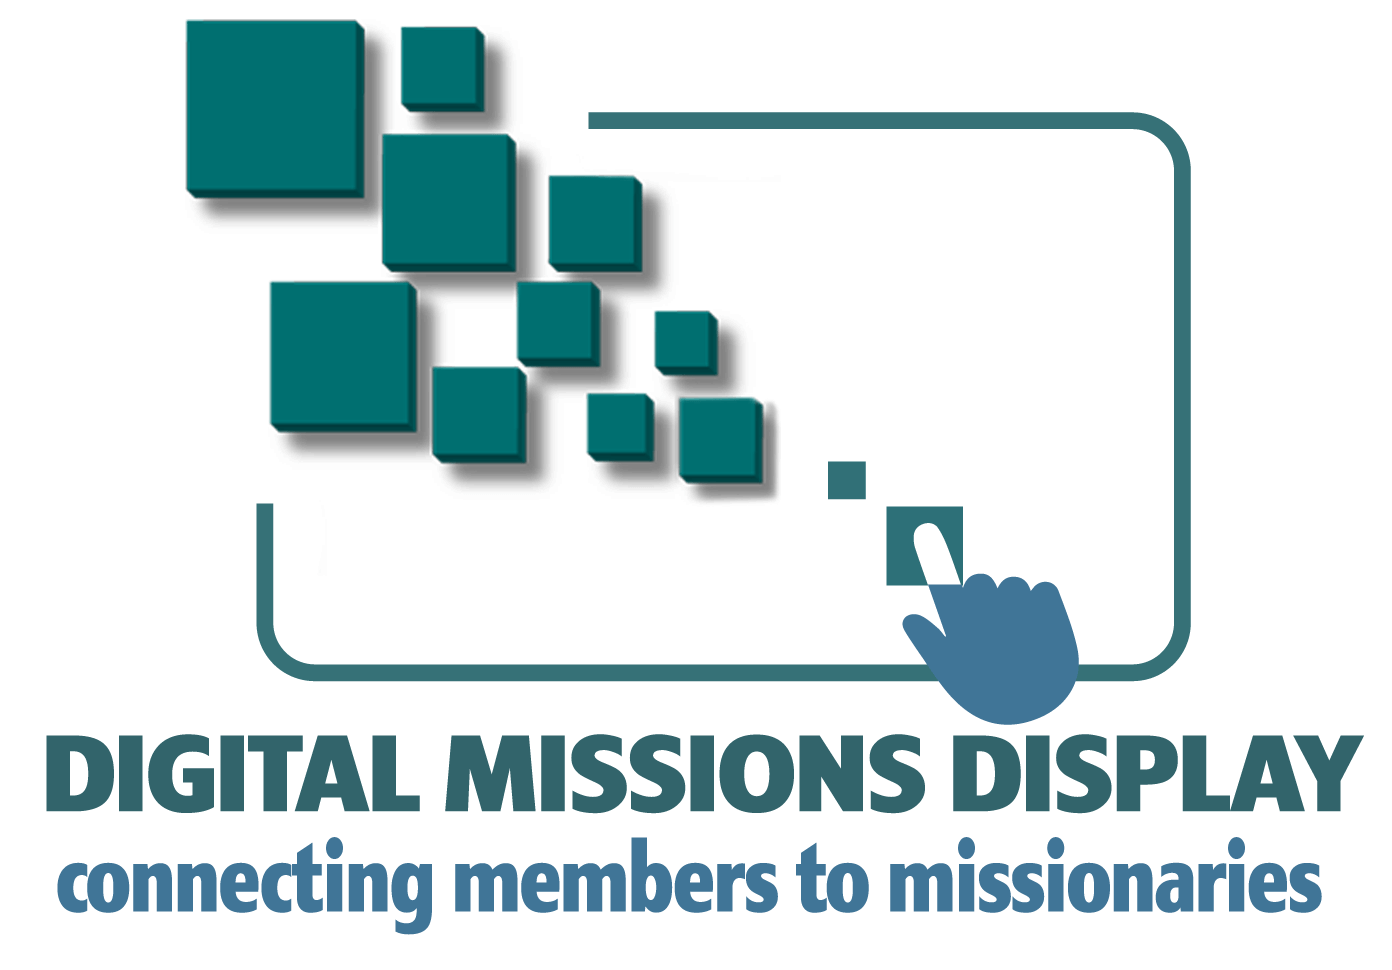 digital missions display logo image